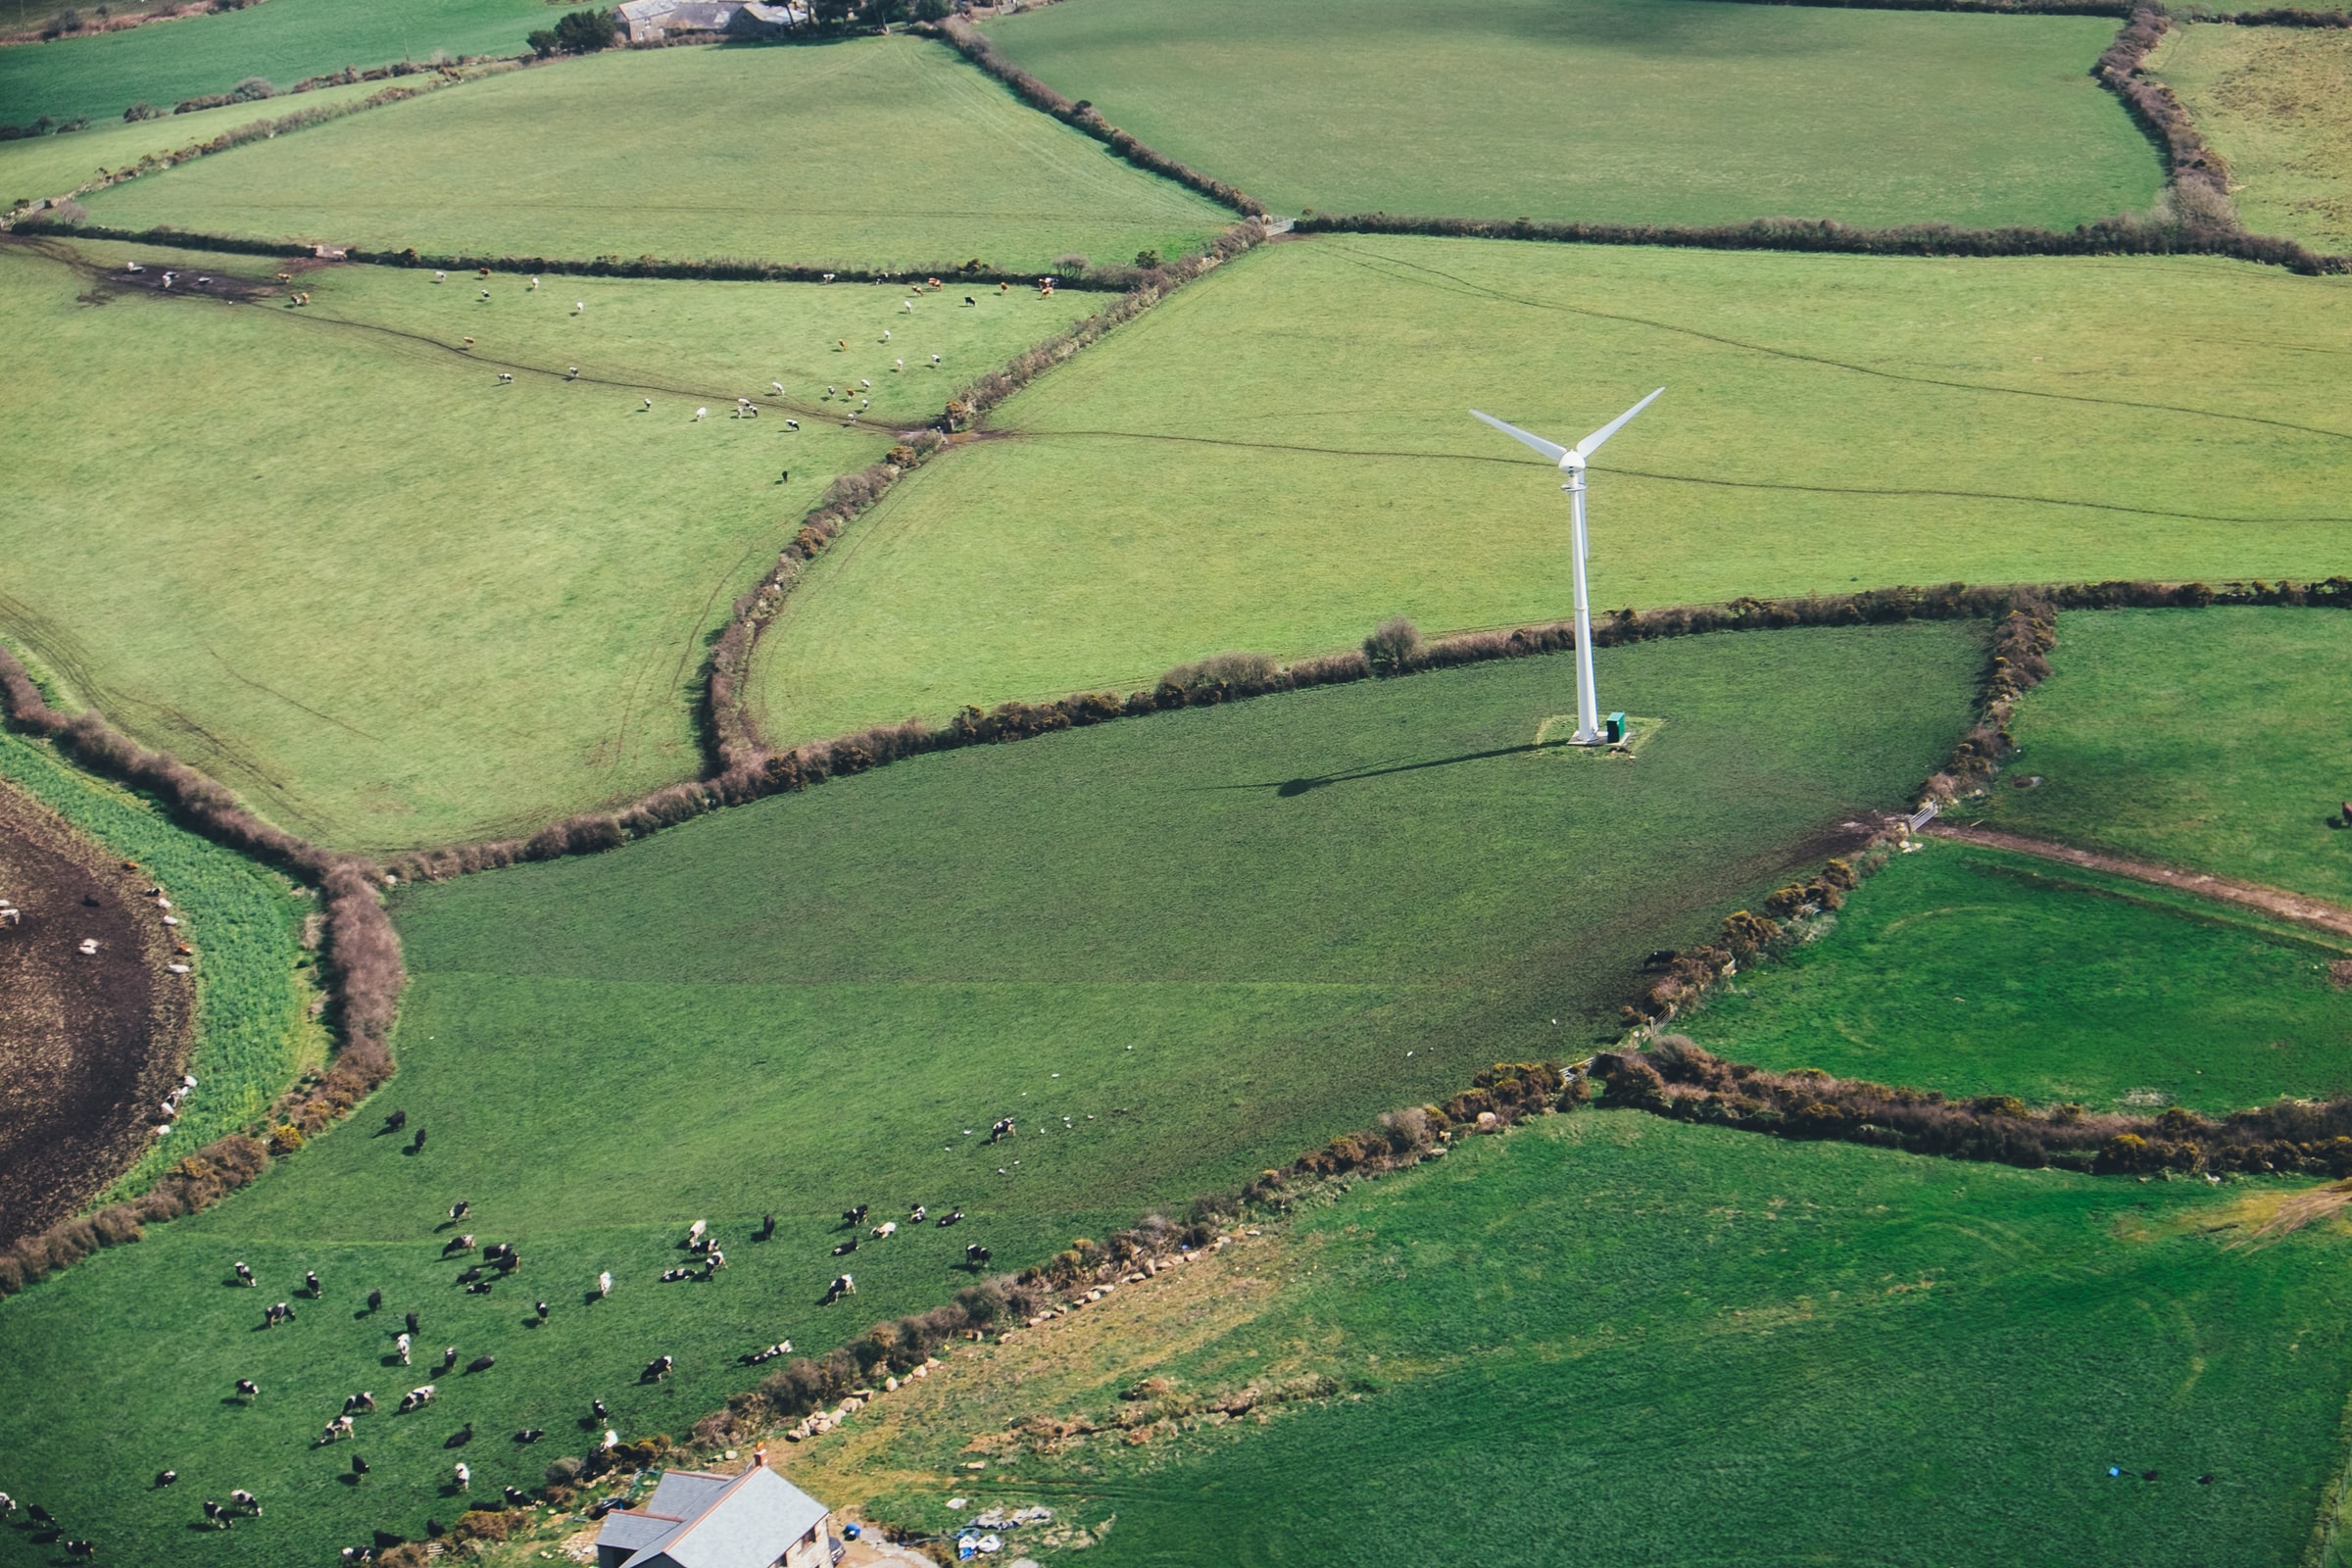 Field in Cornwall with wind turbine